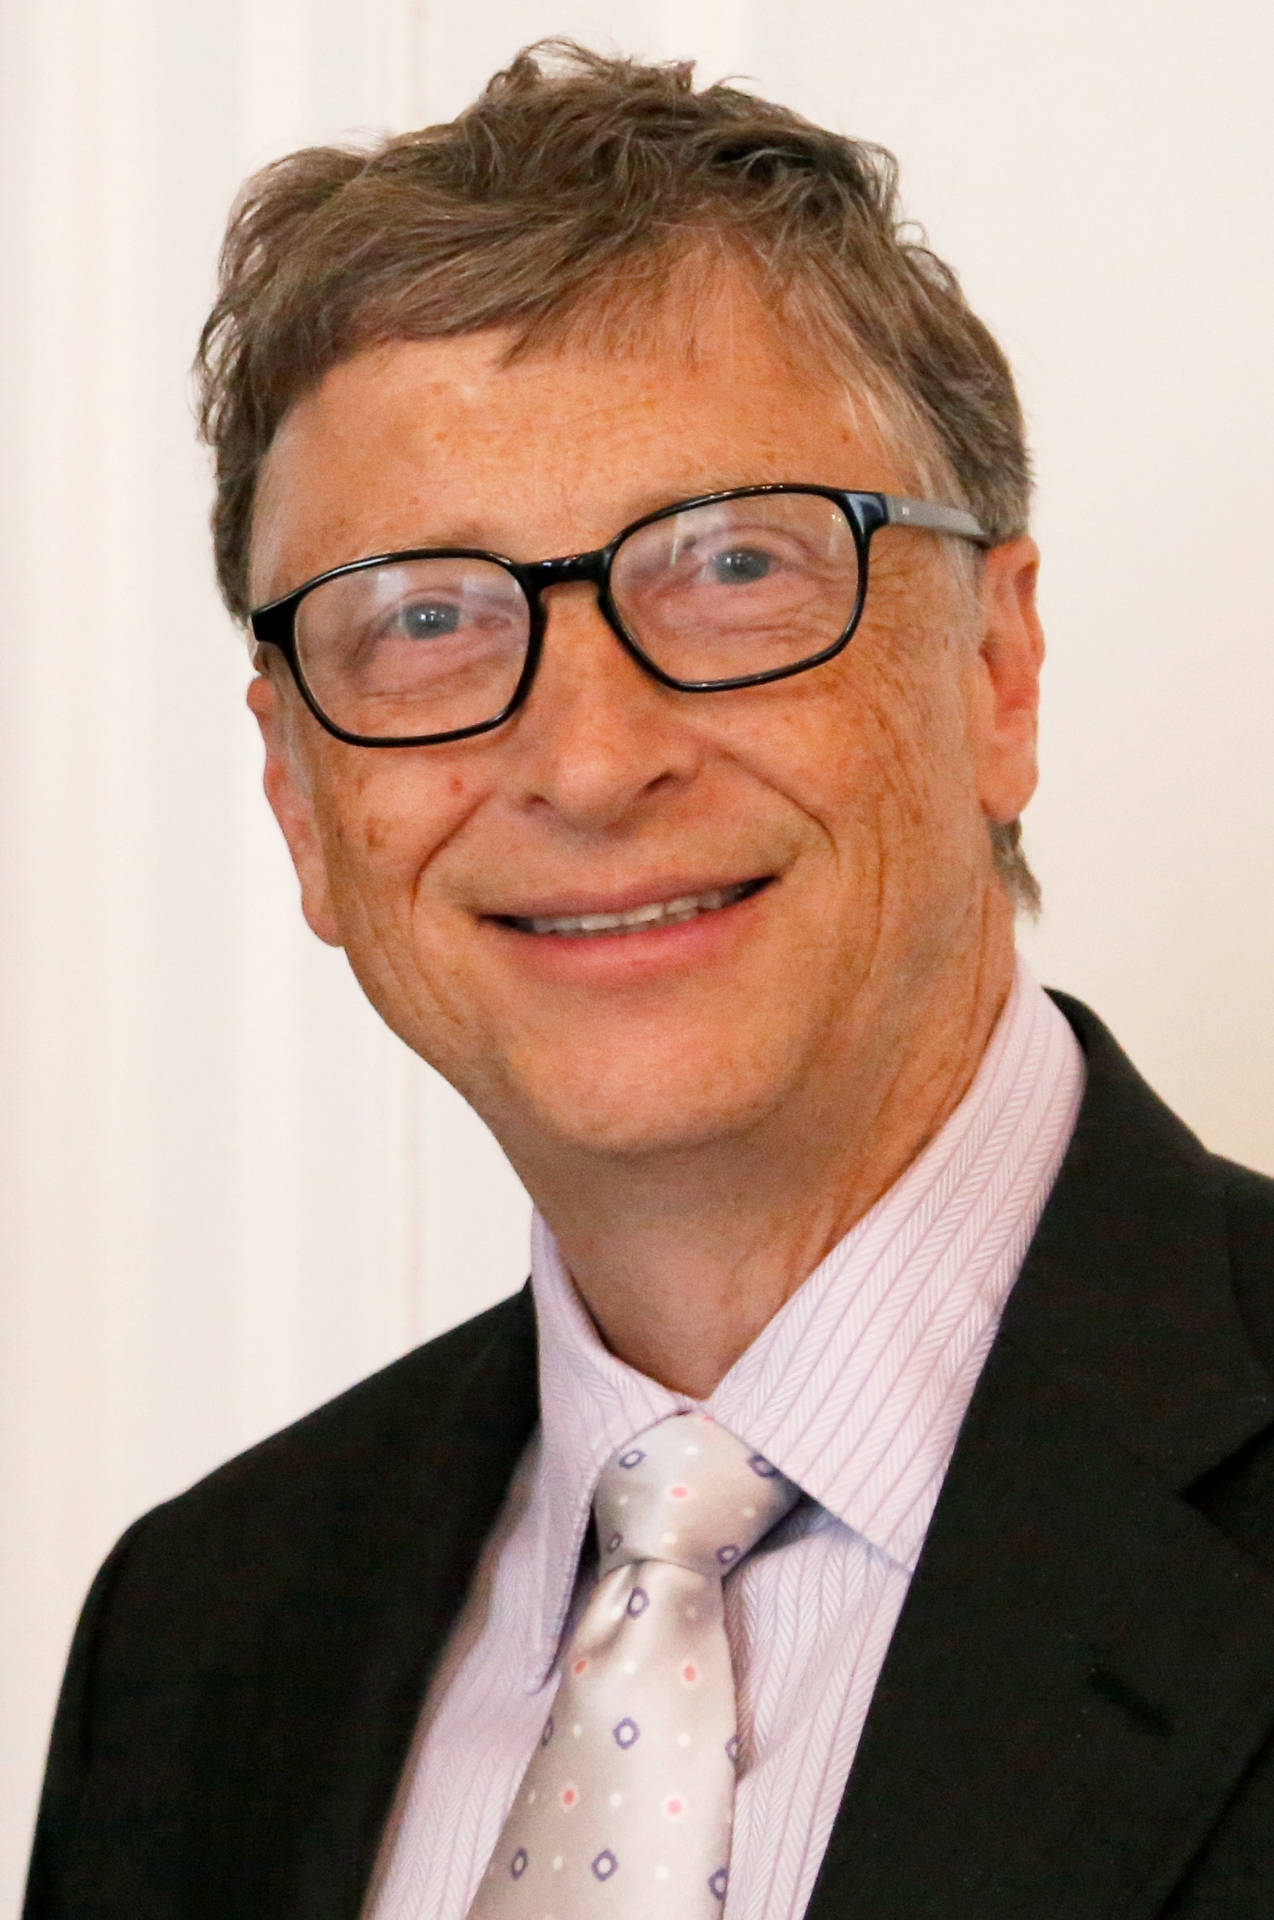 Bill Gates Software Developer Background